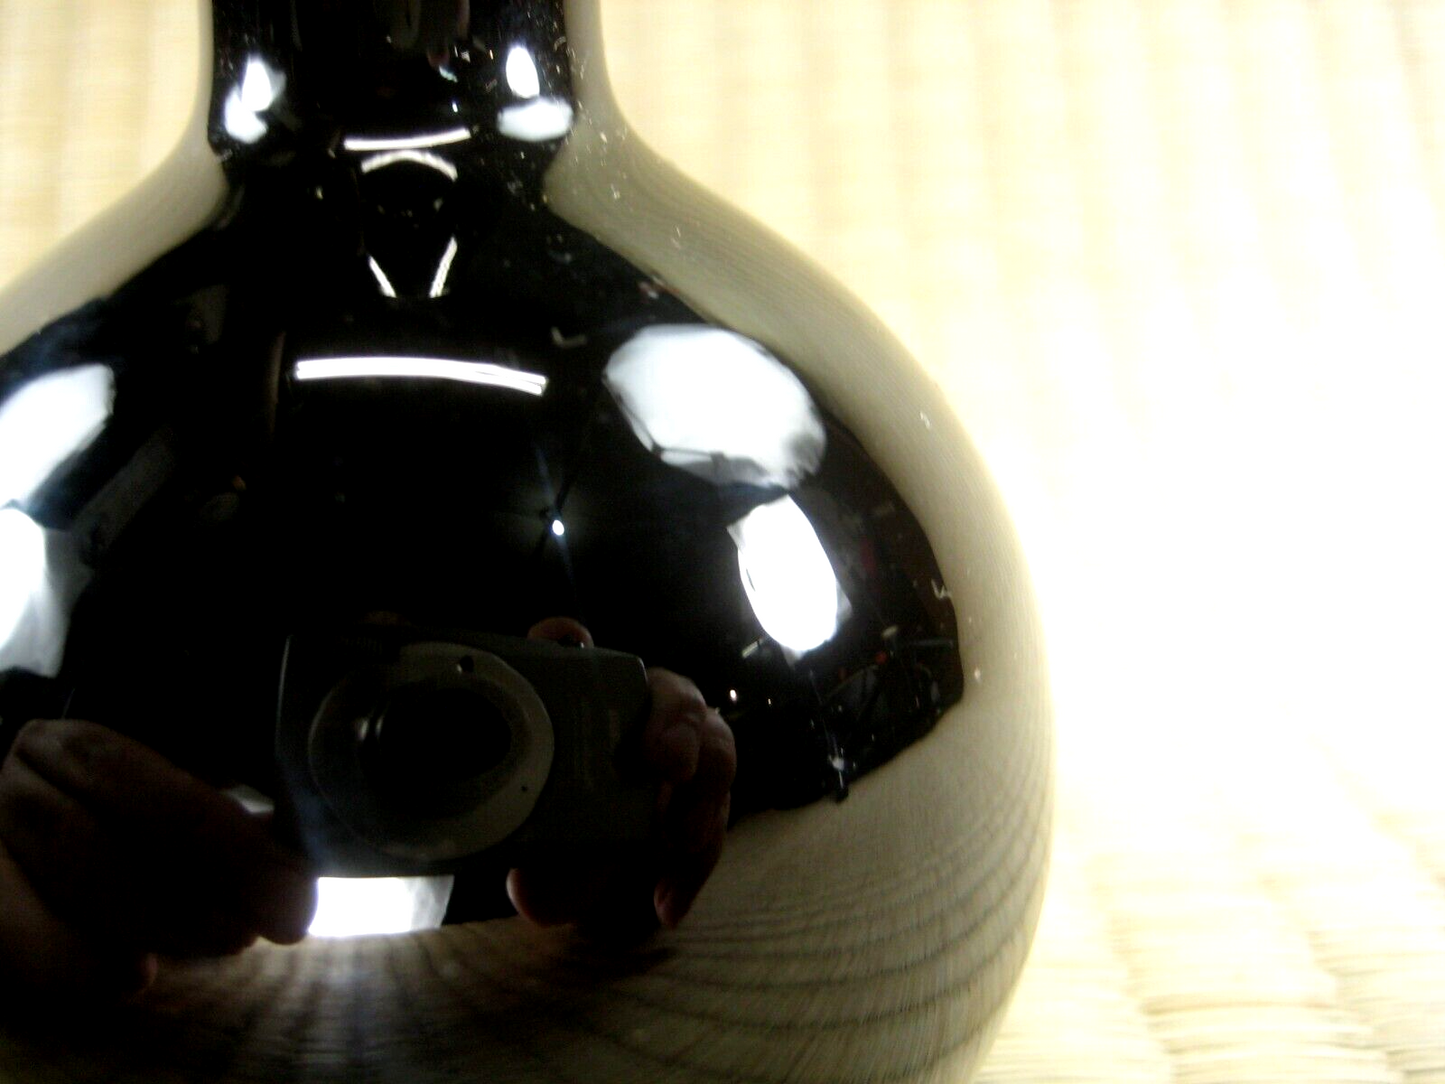 Japanese Black Glass Ikebana Long Necked Round Body Bud Vase 4.25 X 2.25"